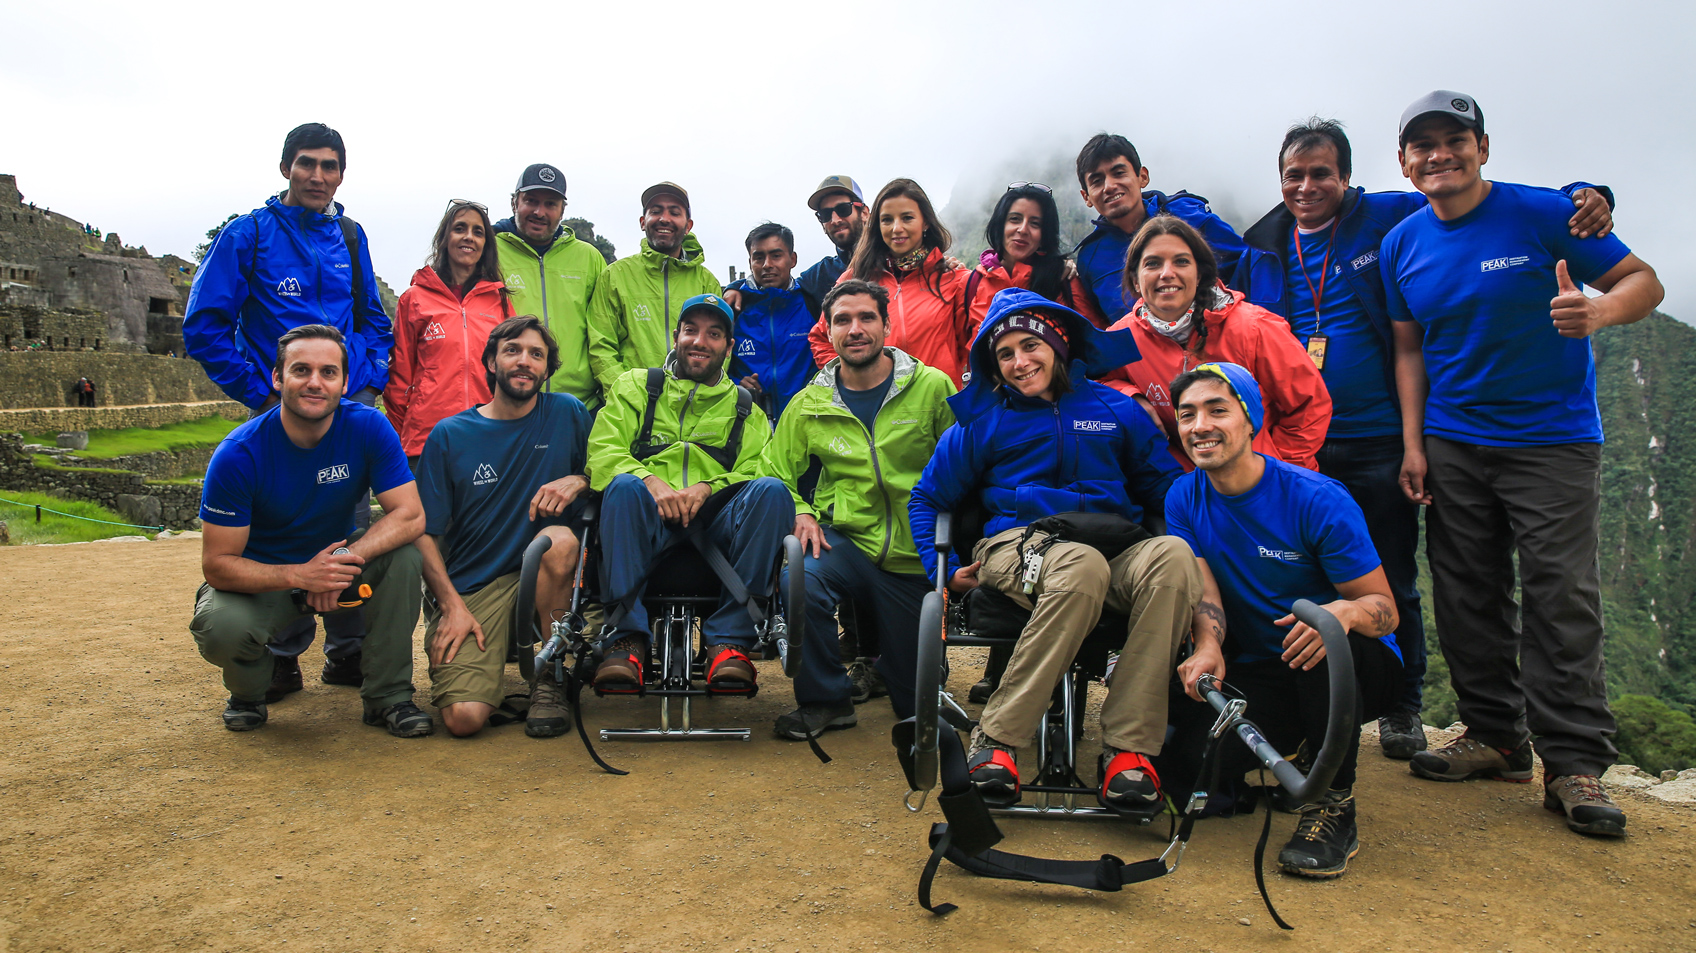 The PEAK DMC & Wheel the World team at Machu Picchu.